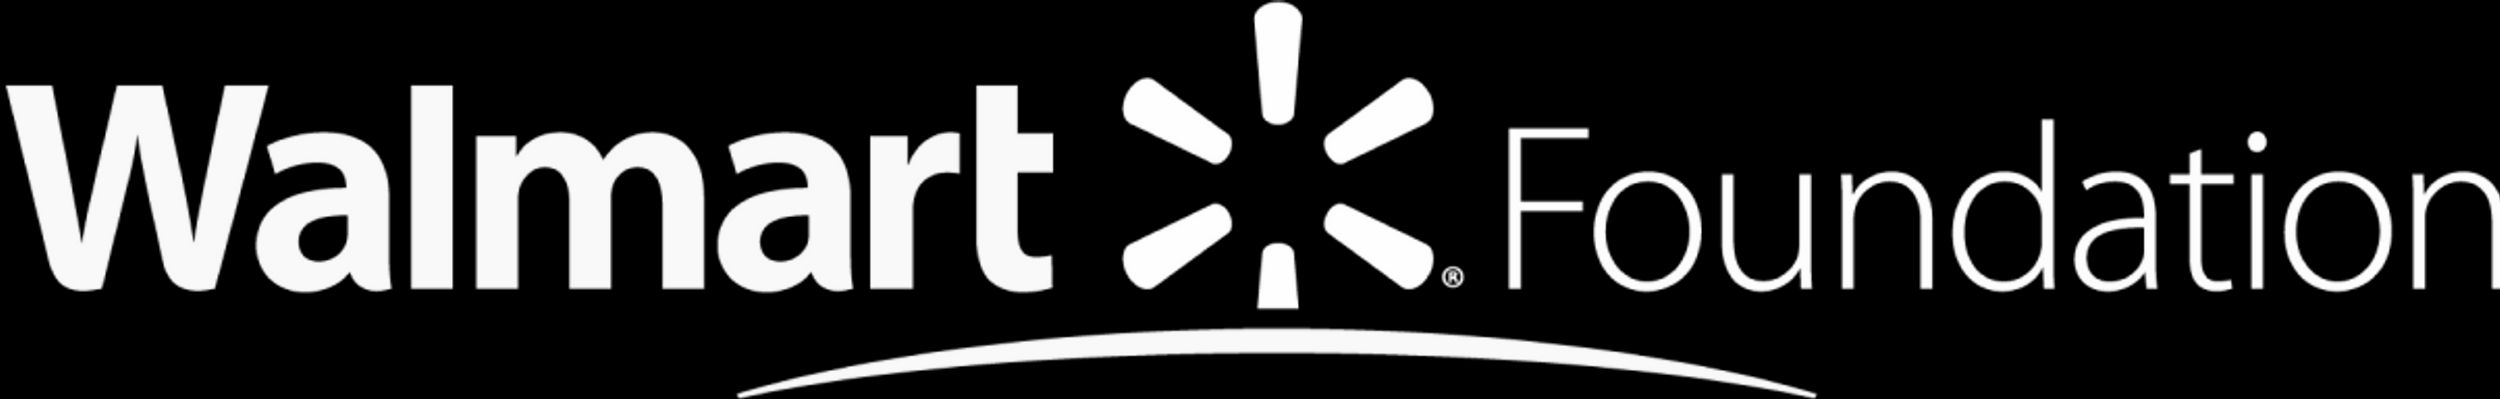 The Walmart Foundation logo